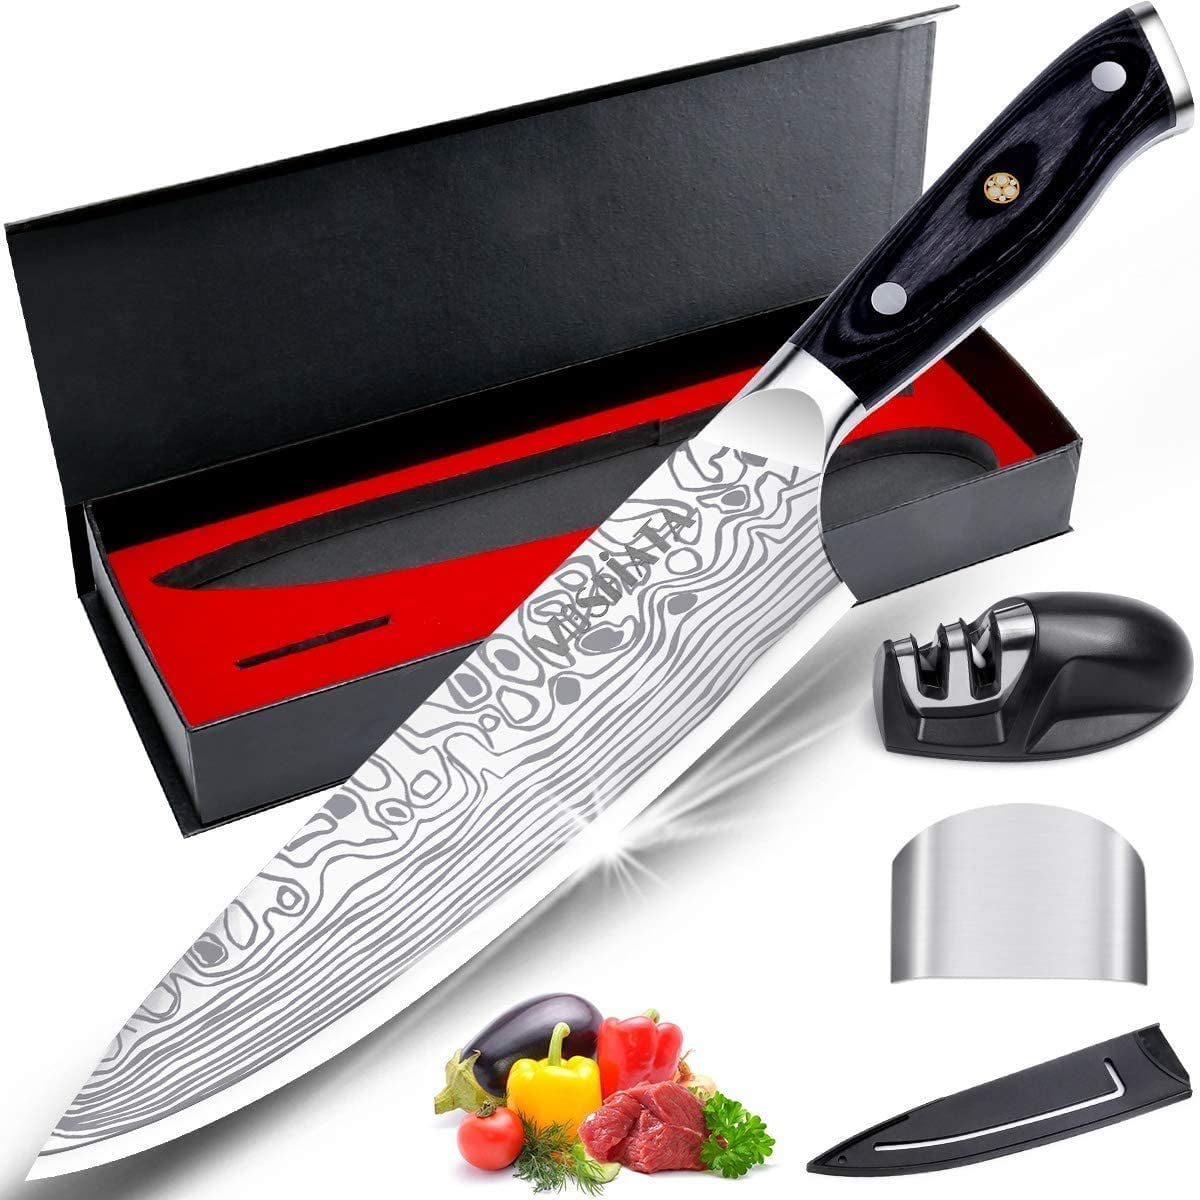 MOSFiATA 7 Piece Kitchen Knife Set, Ultra Sharp Knife Set with High Ca –  mosfiata